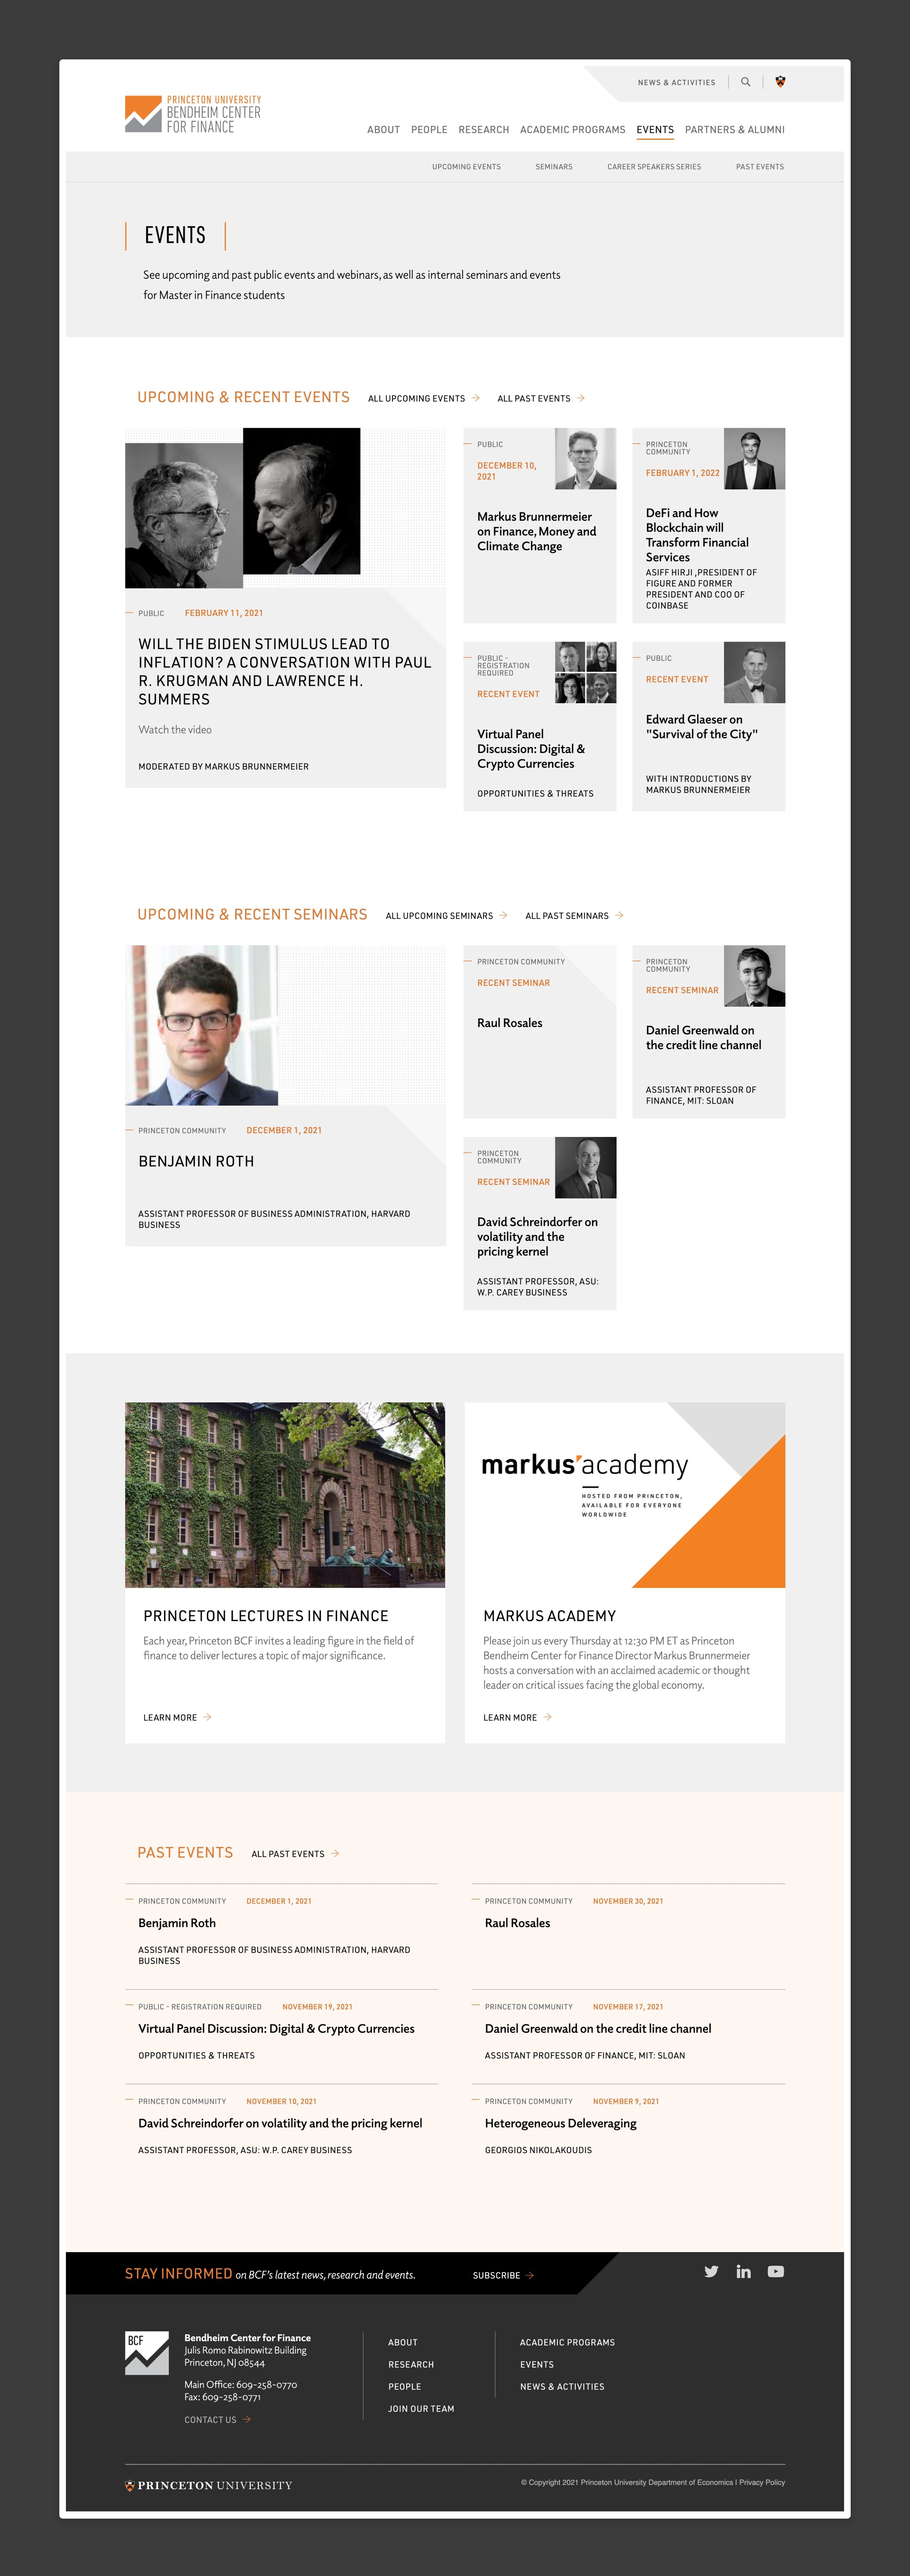 Bendheim Center for Finance at Princeton Website Design Full-Page